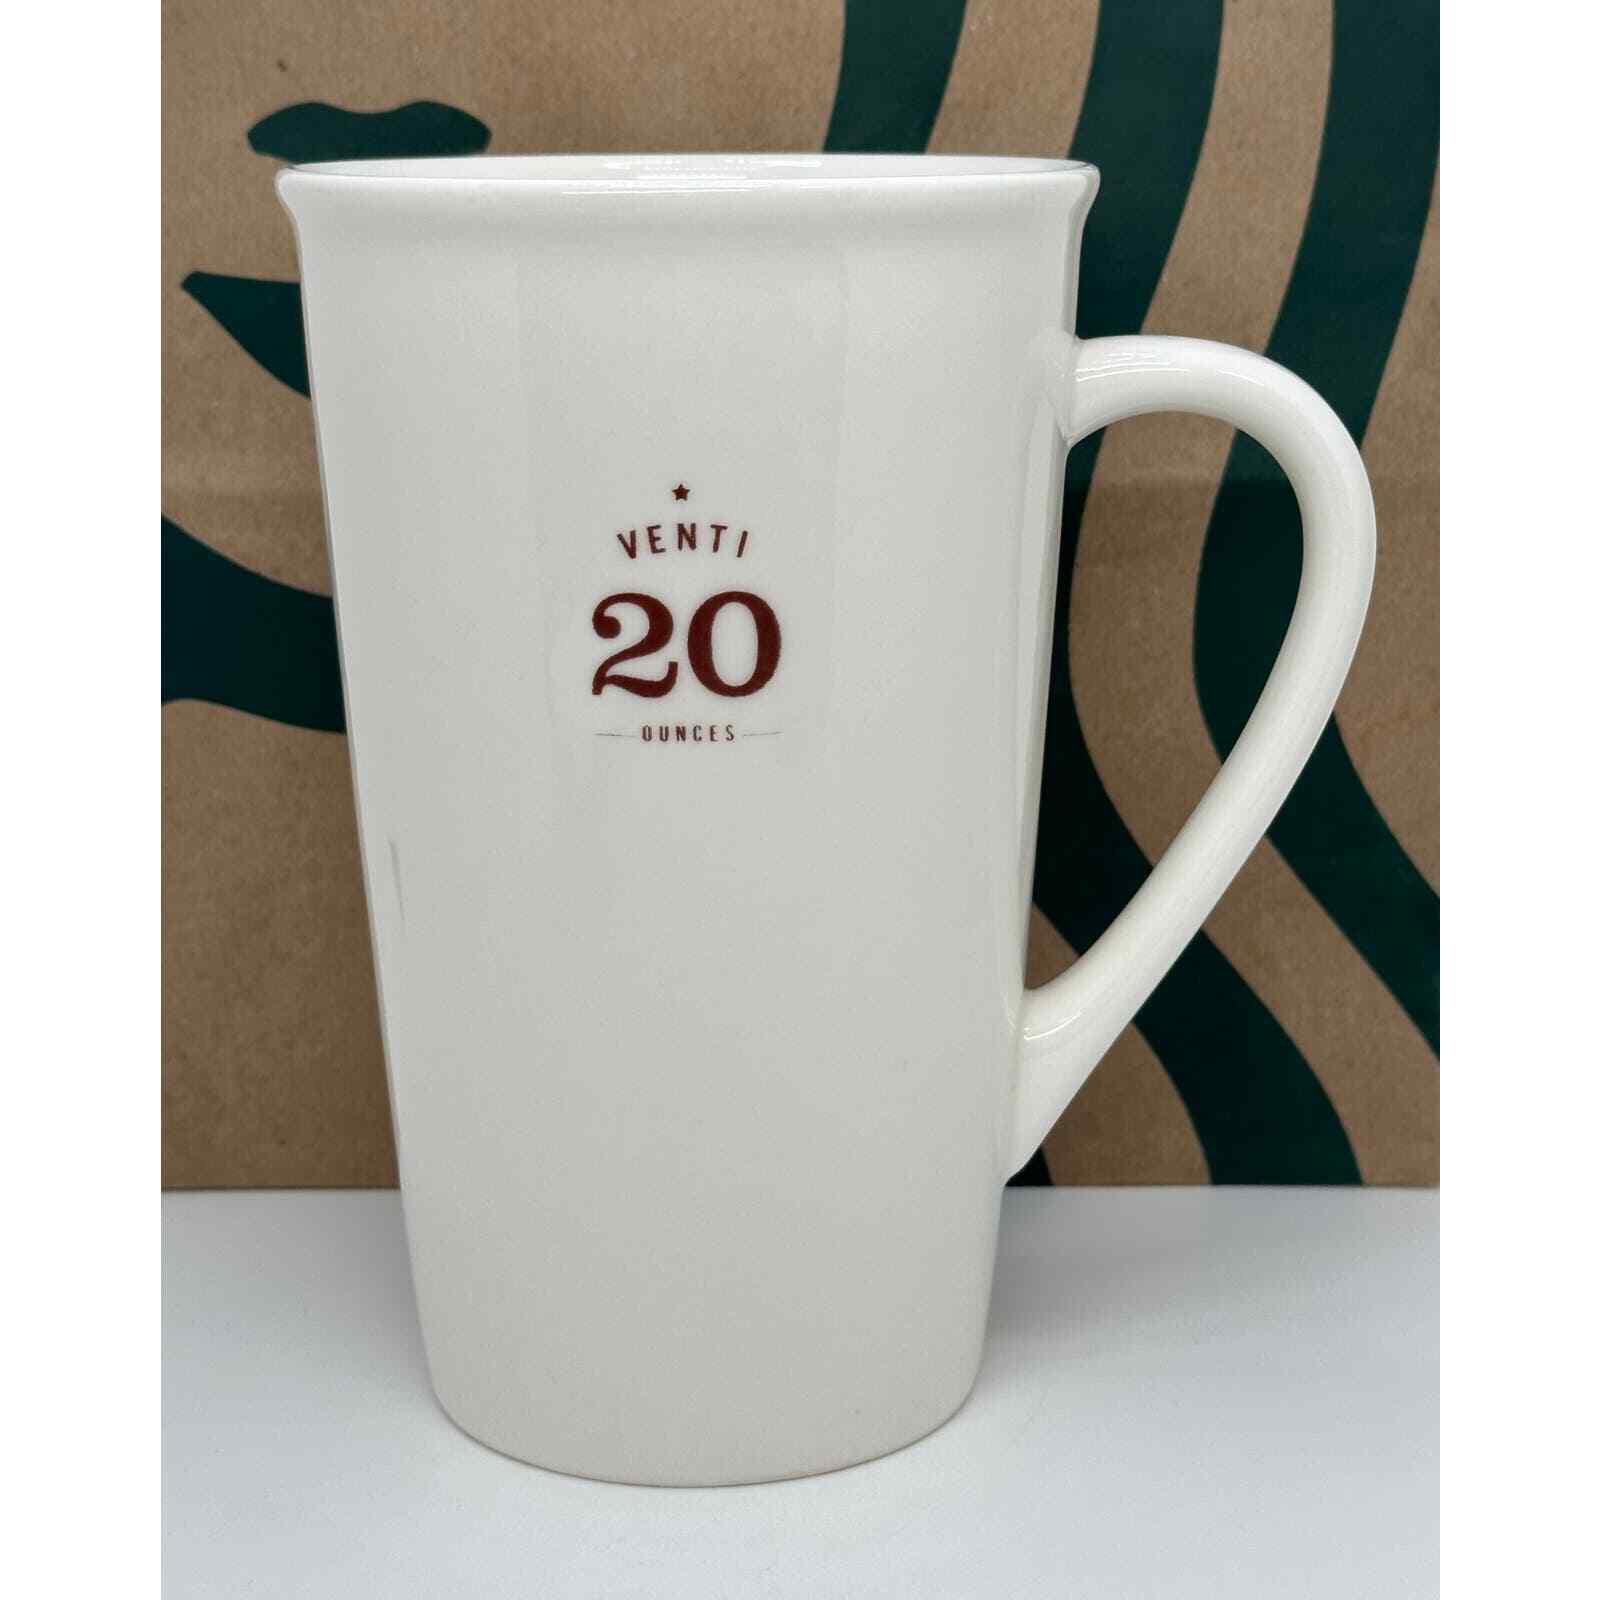 Starbucks 2010 Venti White Ceramic Red Letters Mug Cup 20 oz